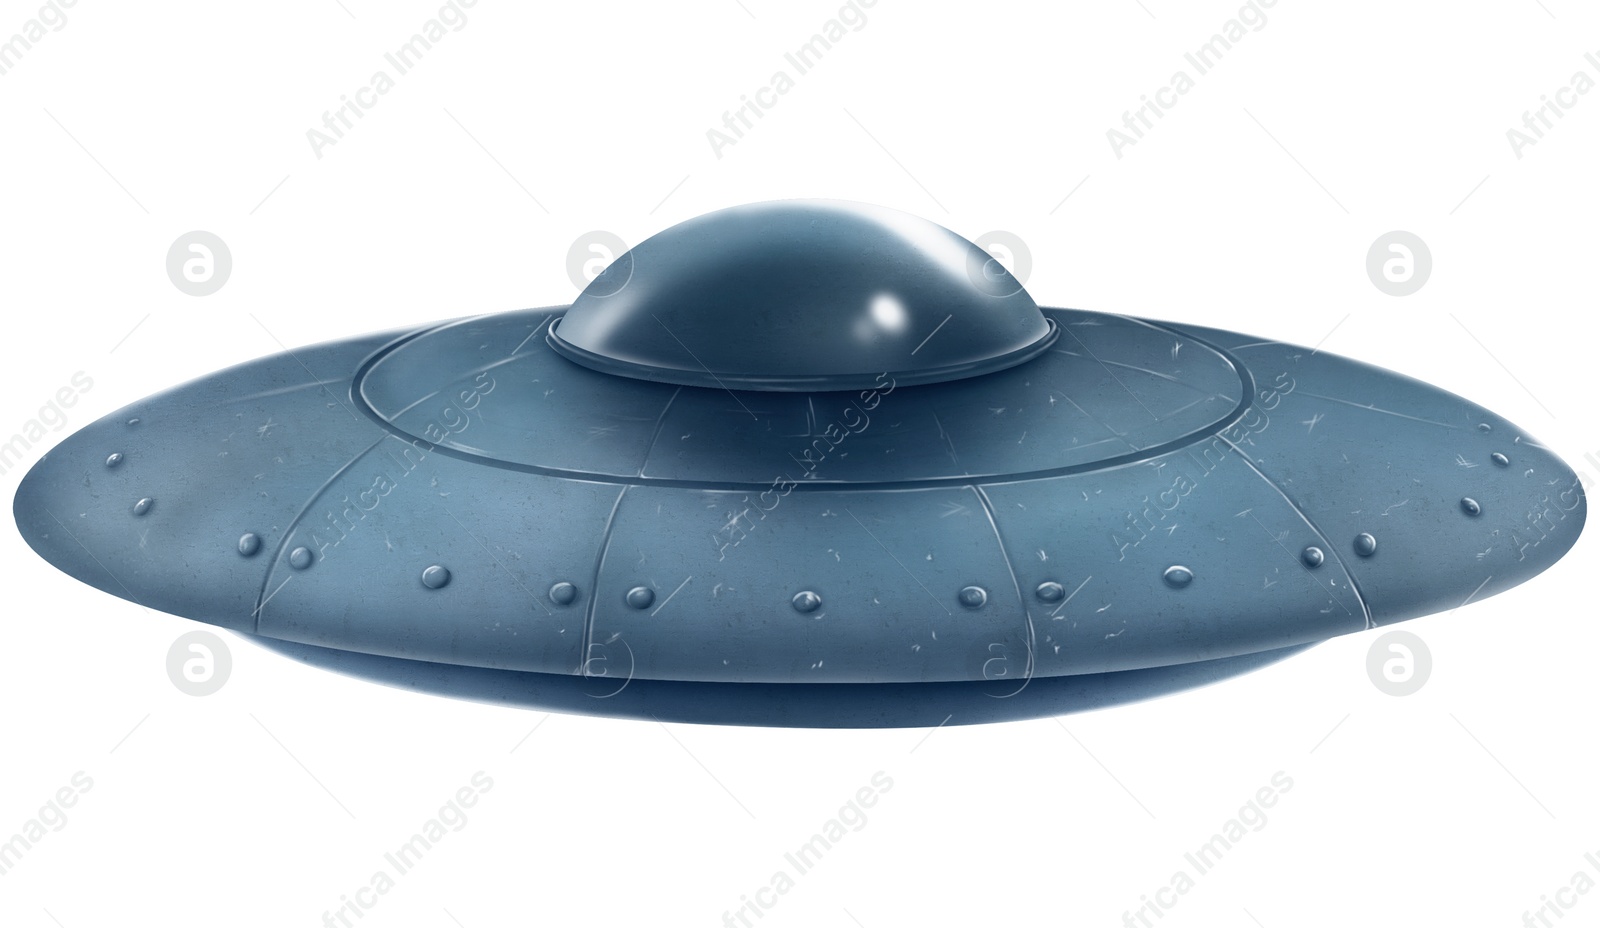 Illustration of UFO. Alien spaceship on white background, illustration